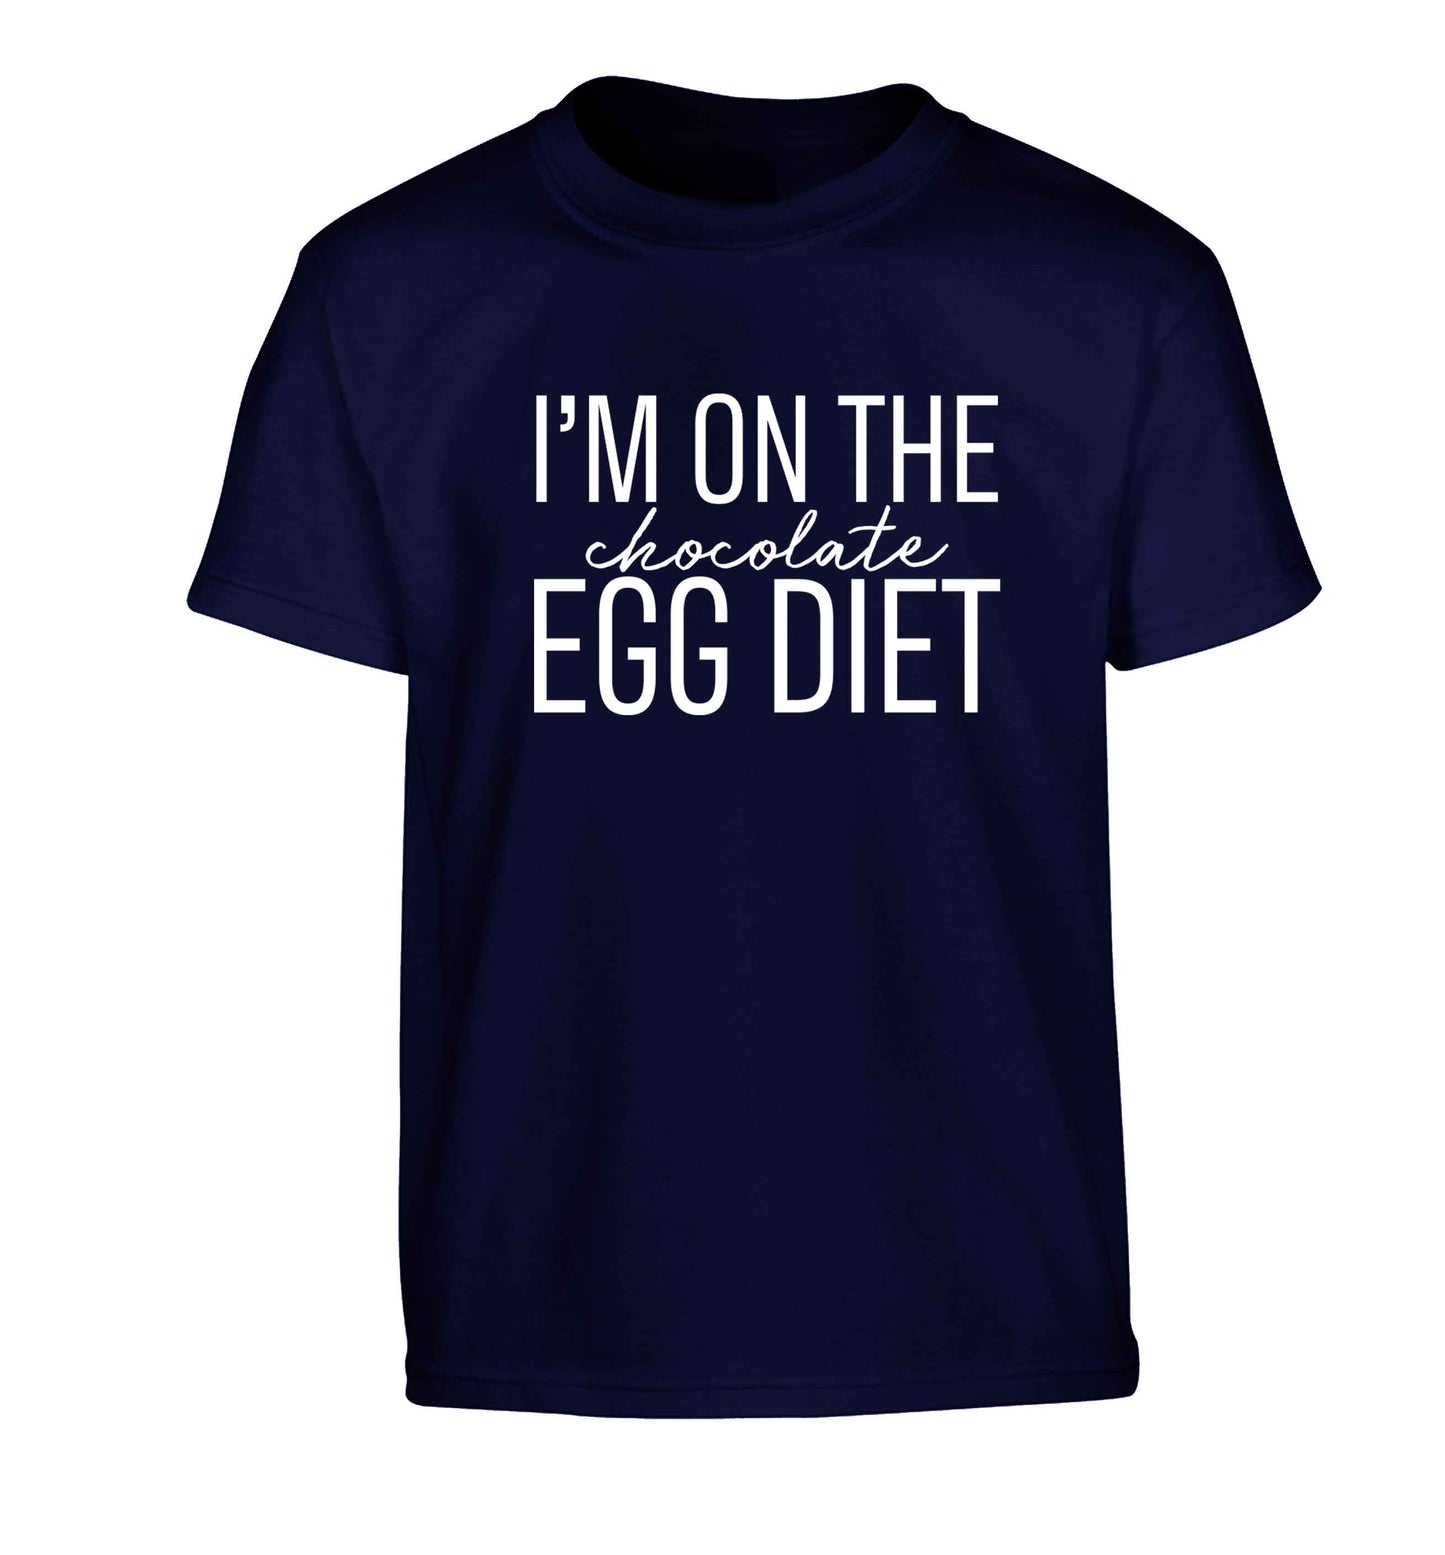 I'm on the chocolate egg diet Children's navy Tshirt 12-13 Years